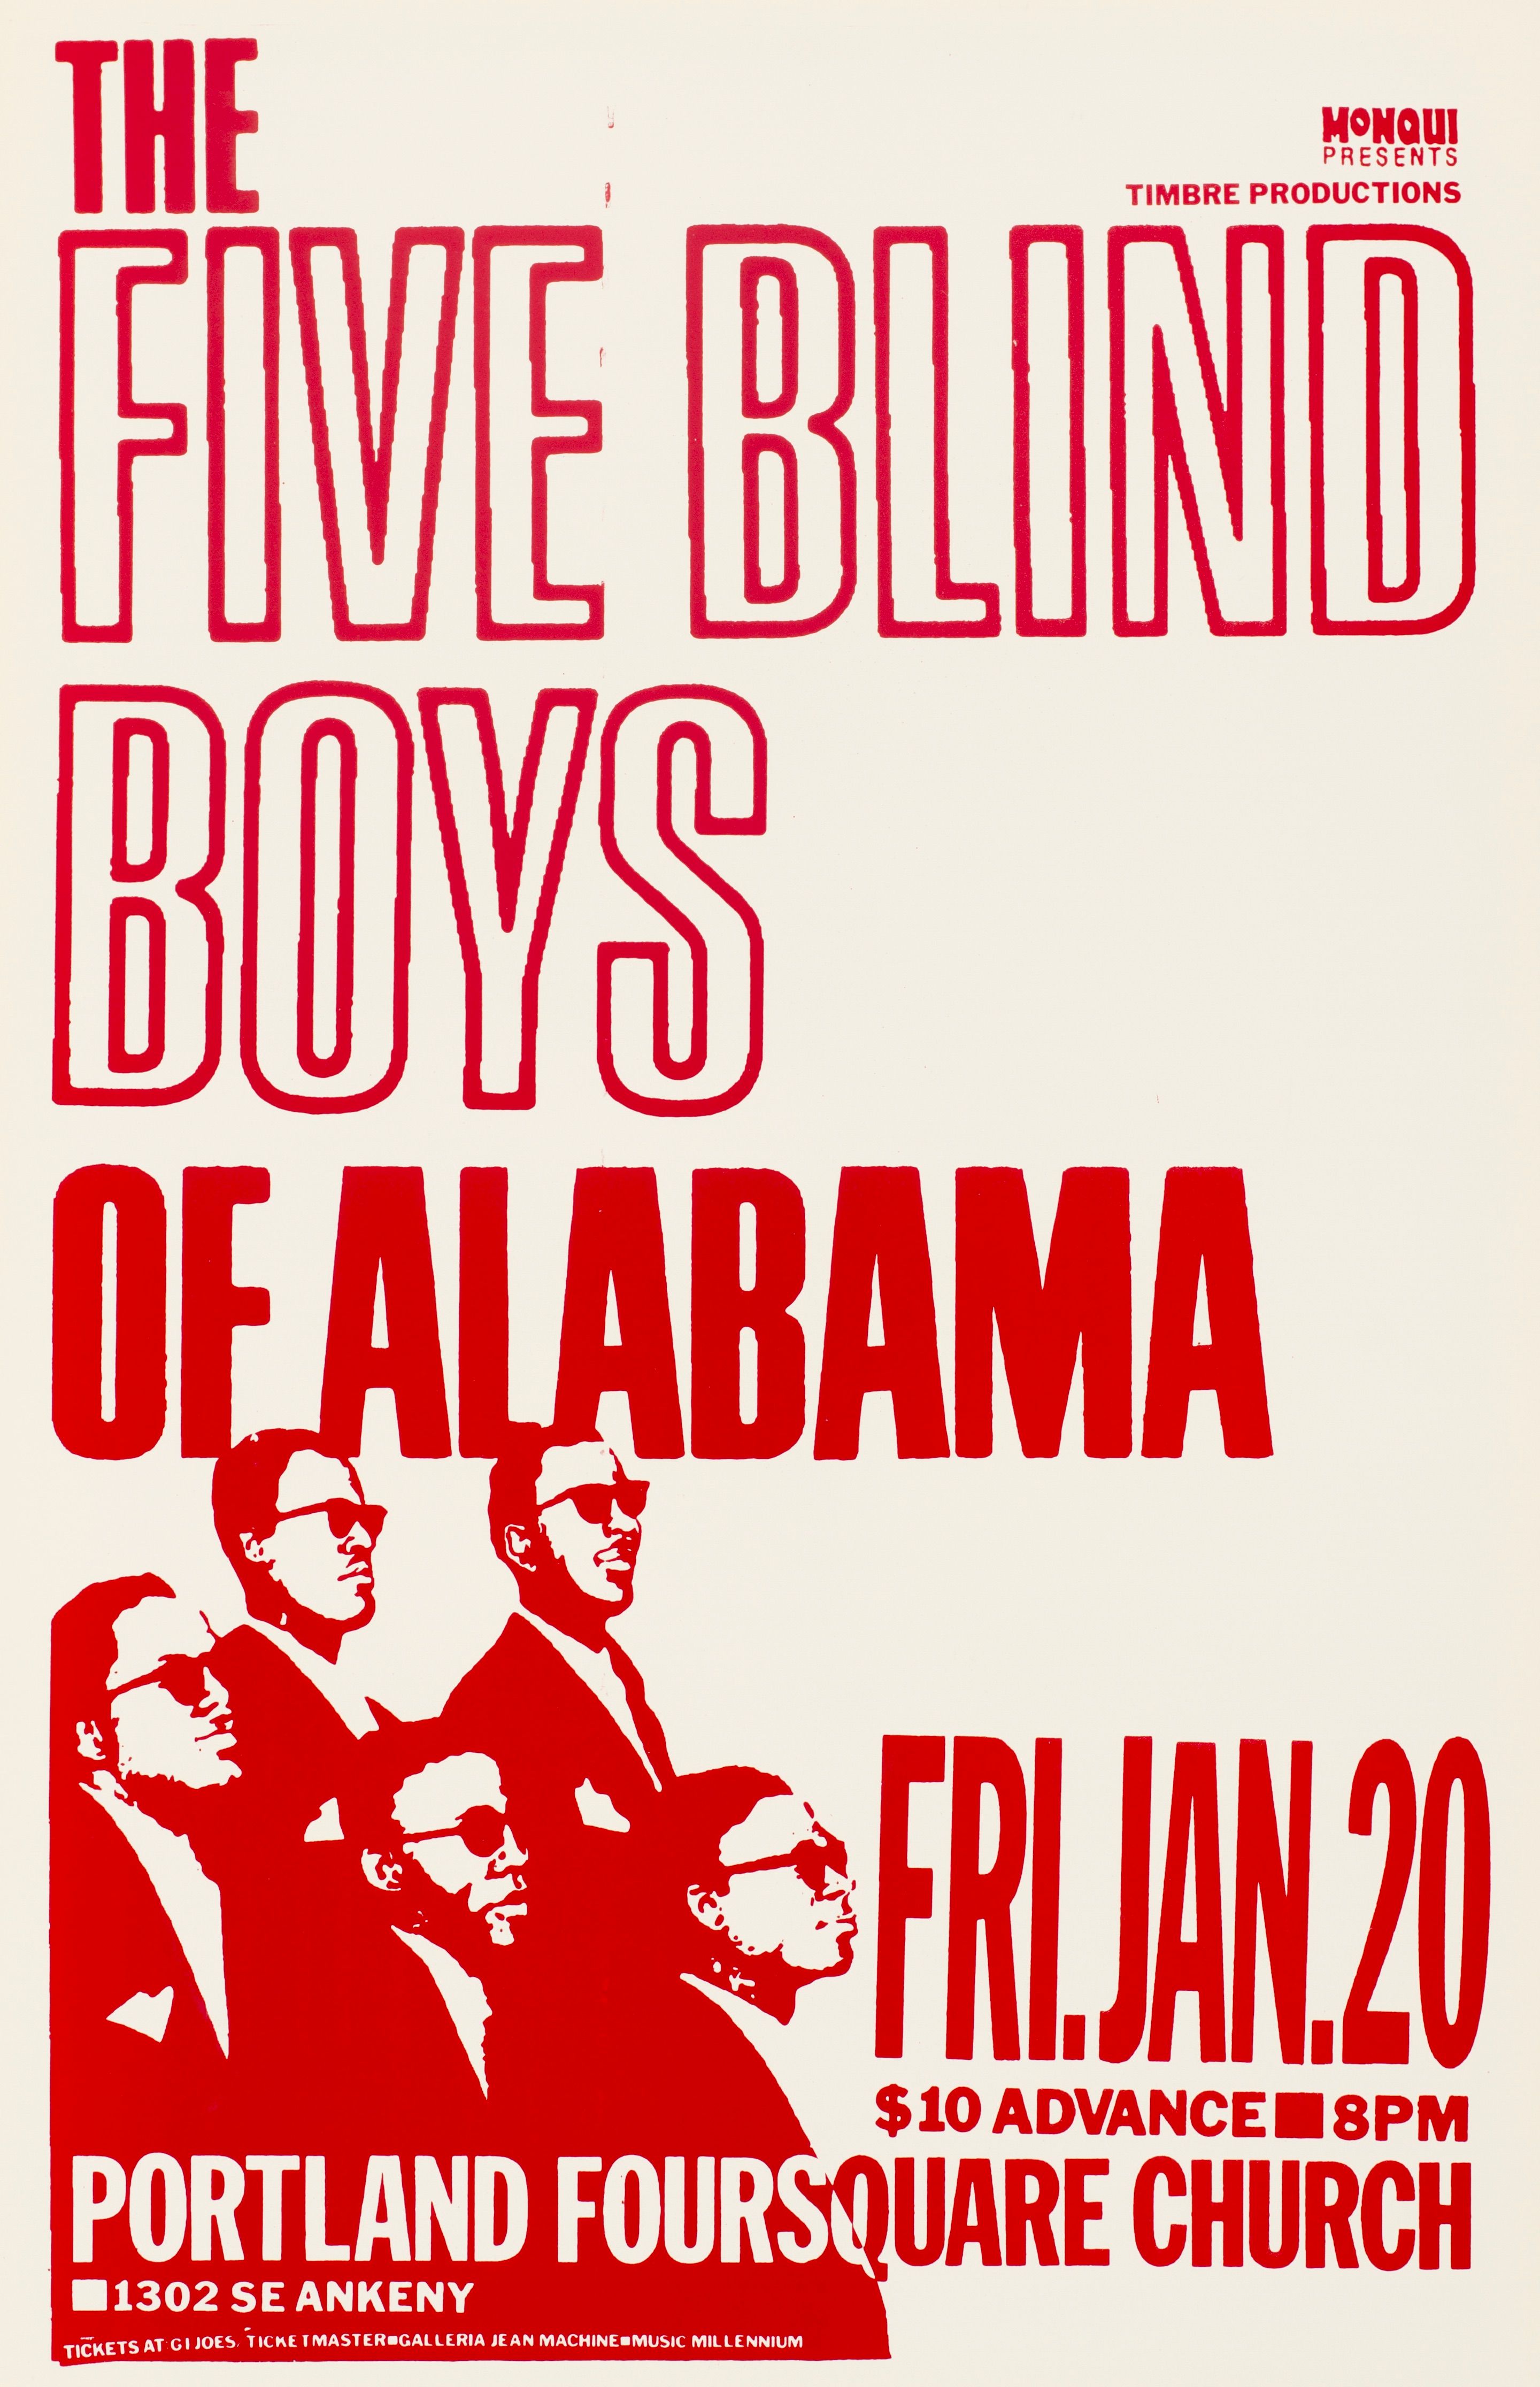 MXP-64.3 Five Blind Boys Of Alabama 1984 Portland Foursquare Church  Jan 20 Concert Poster